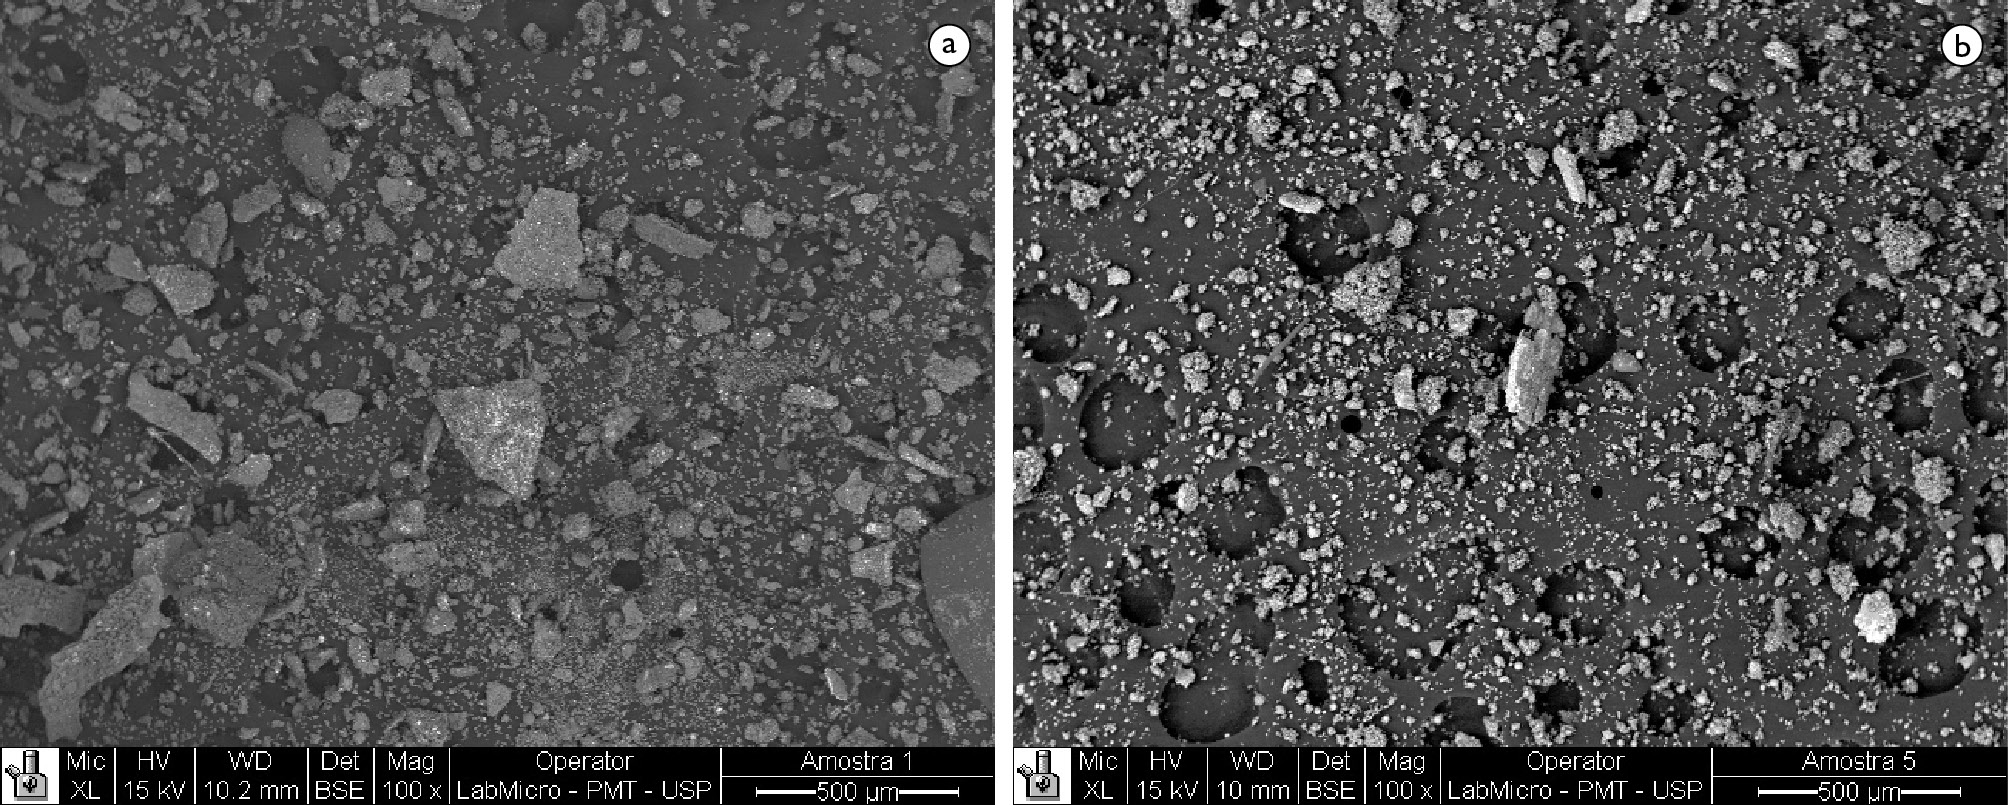 Rizzi et al. Figura 4. Micrografias das poeiras provenientes de ensaios a 1.400 C (A) e 1.450 C (B). Escala de 500 µm, aumento de 100X.